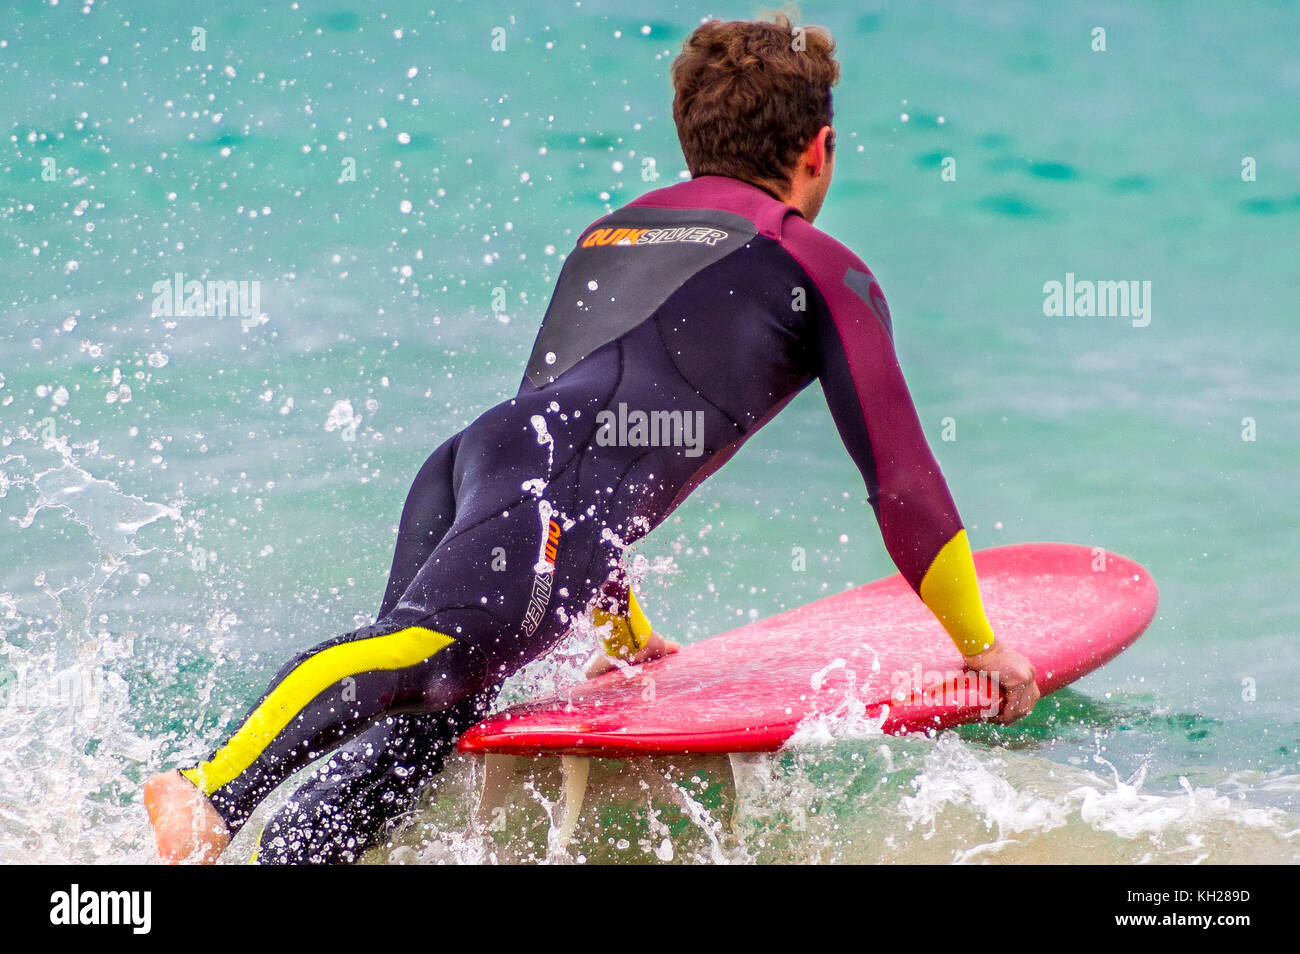 A surfer enters the water at Bondi Beach, Sydney, NSW, Australia Stock Photo